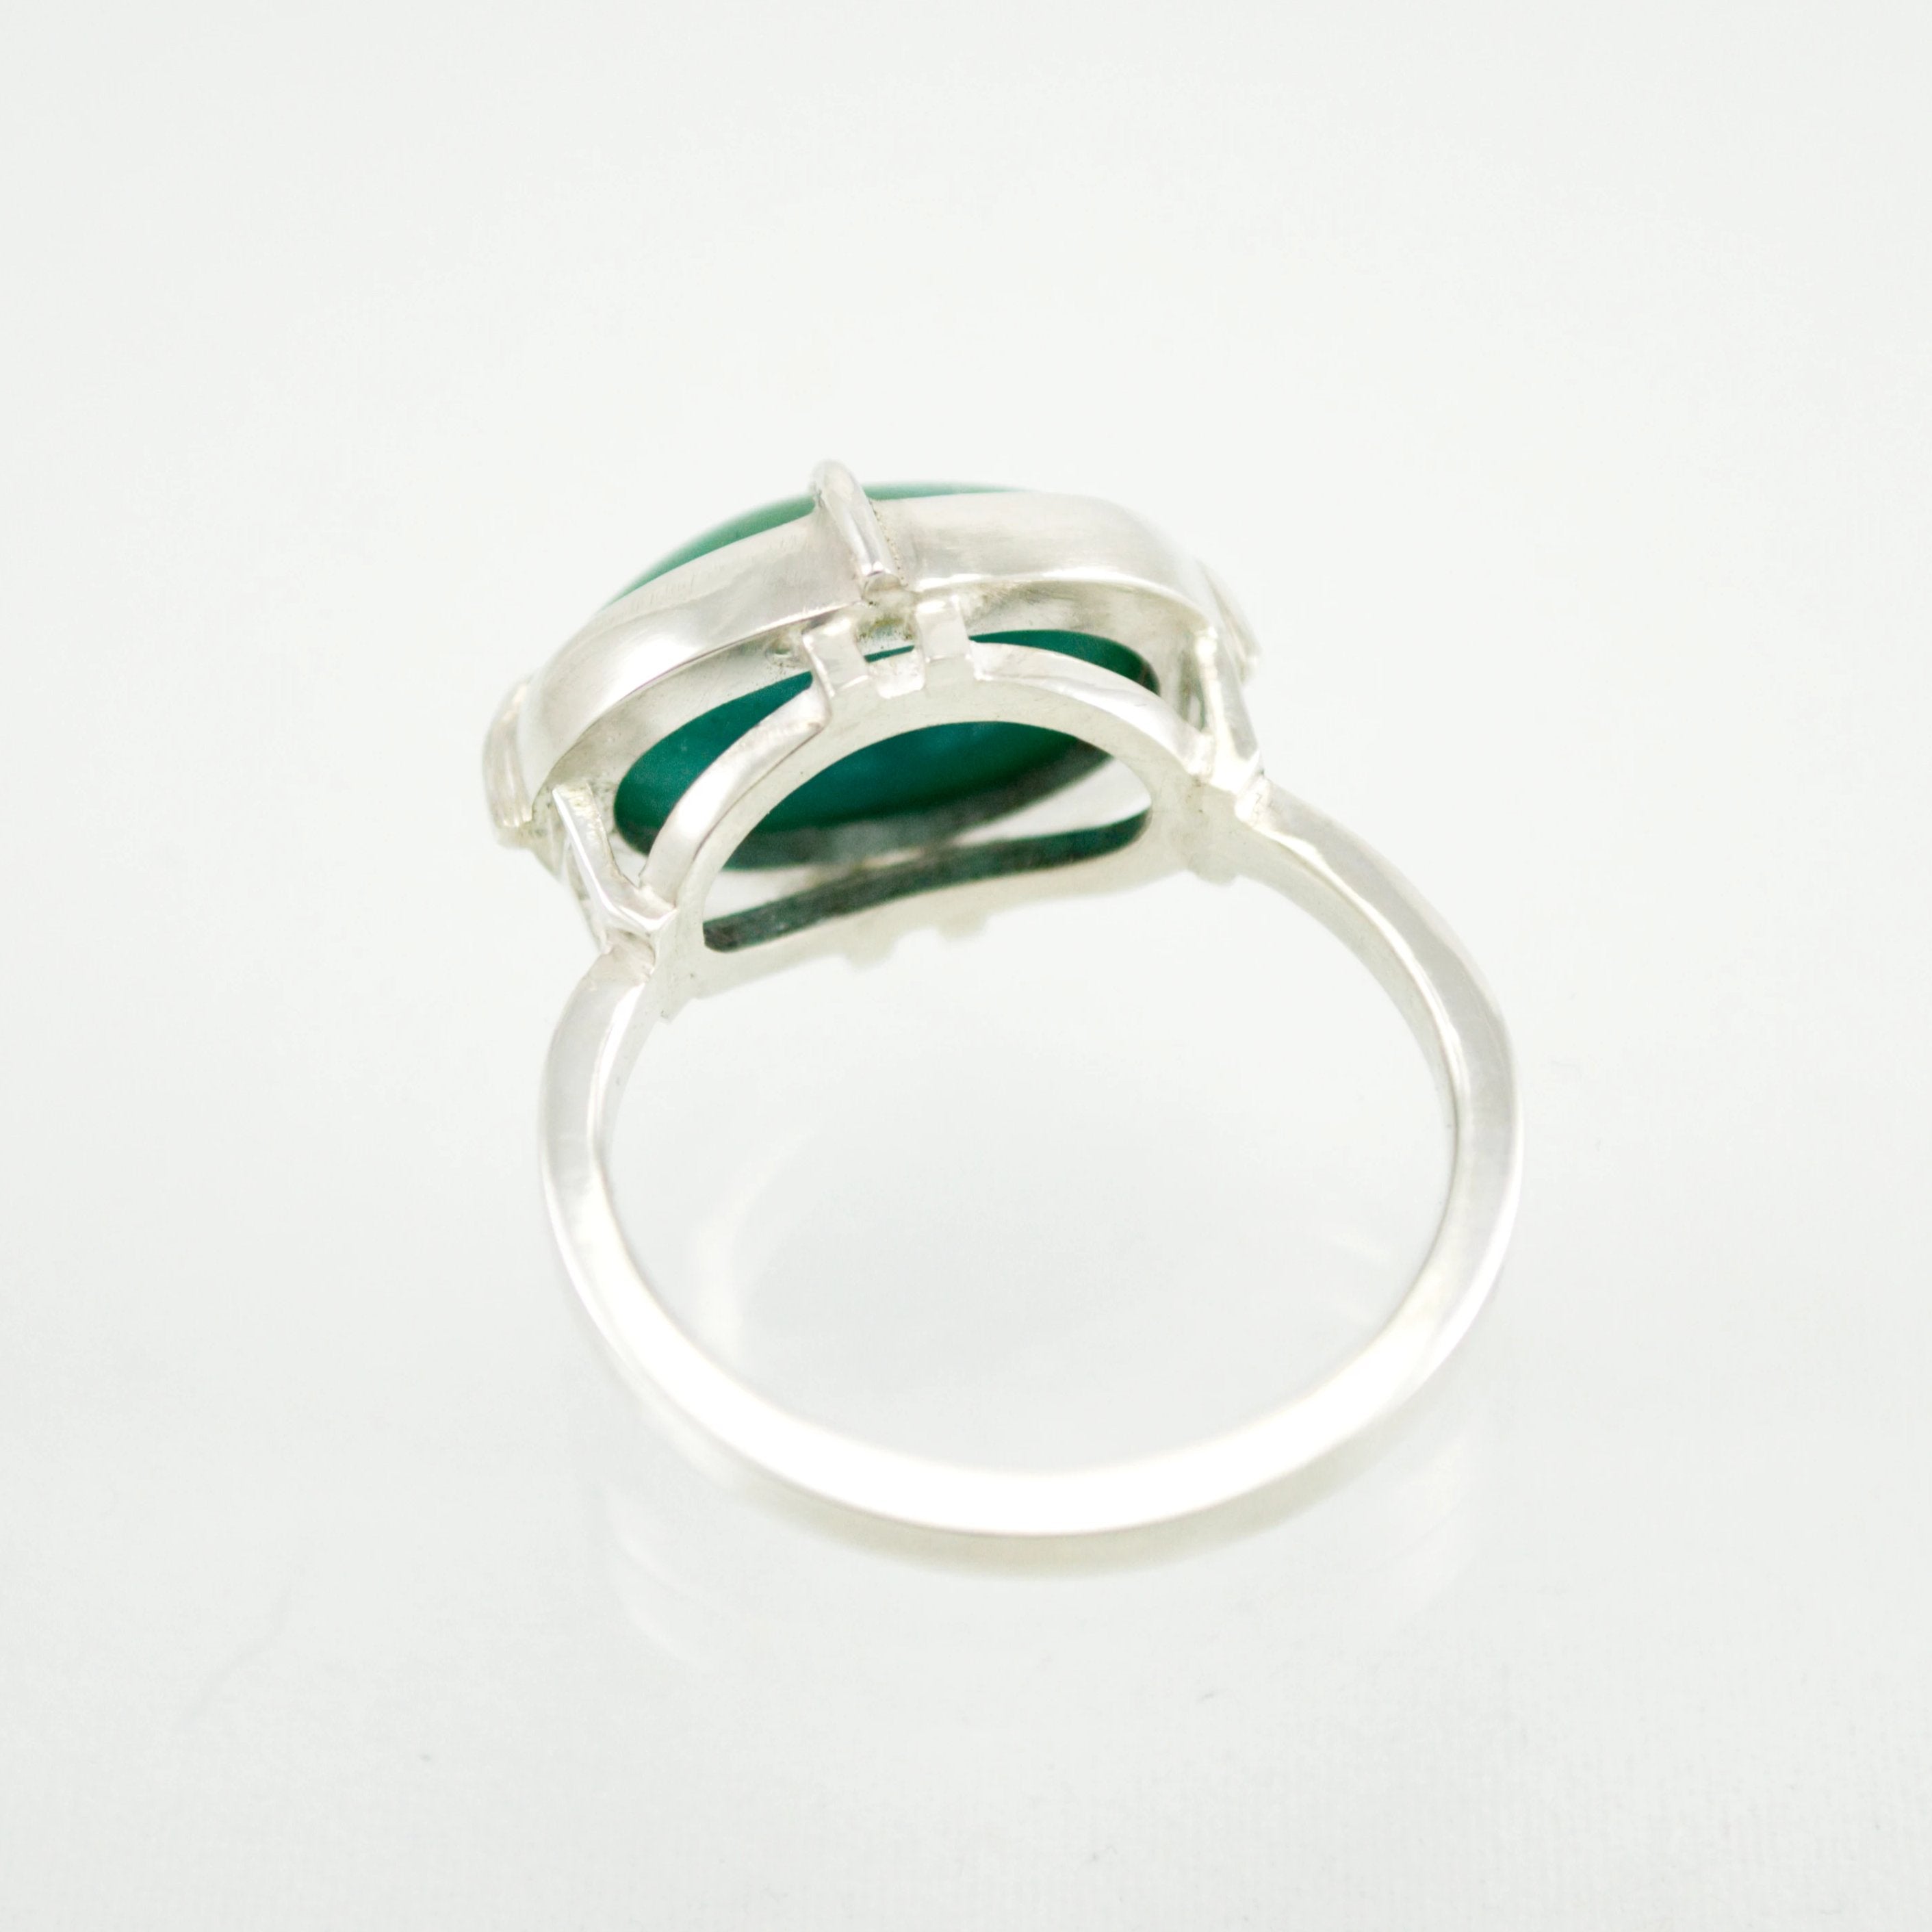 Chrysocolla Scaffold Ring - Size 7